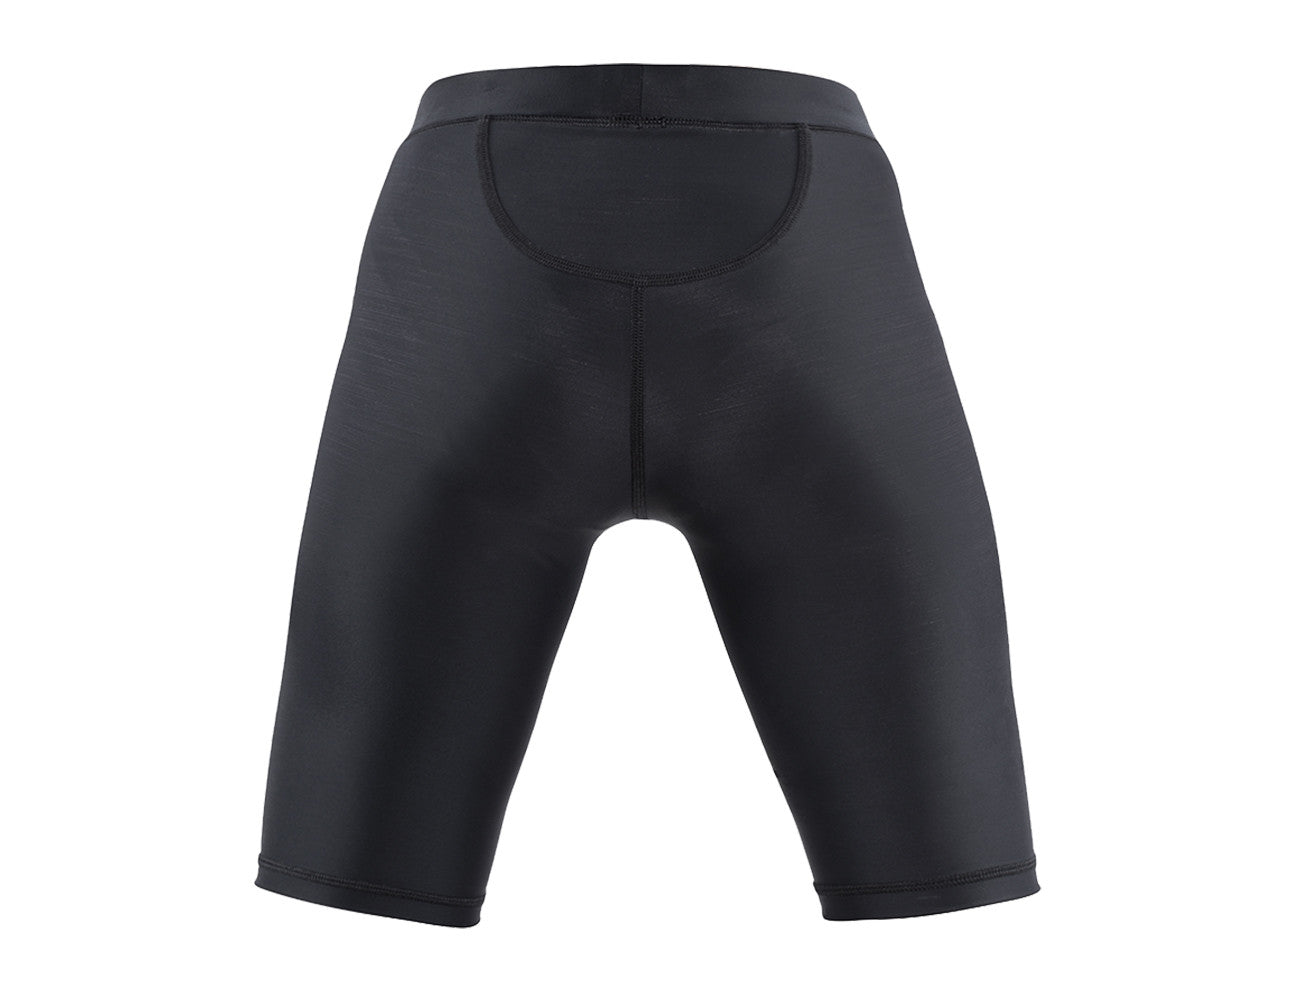 Men's Compression Shorts - Performance Grade Compression Shorts Endurance Shield 360